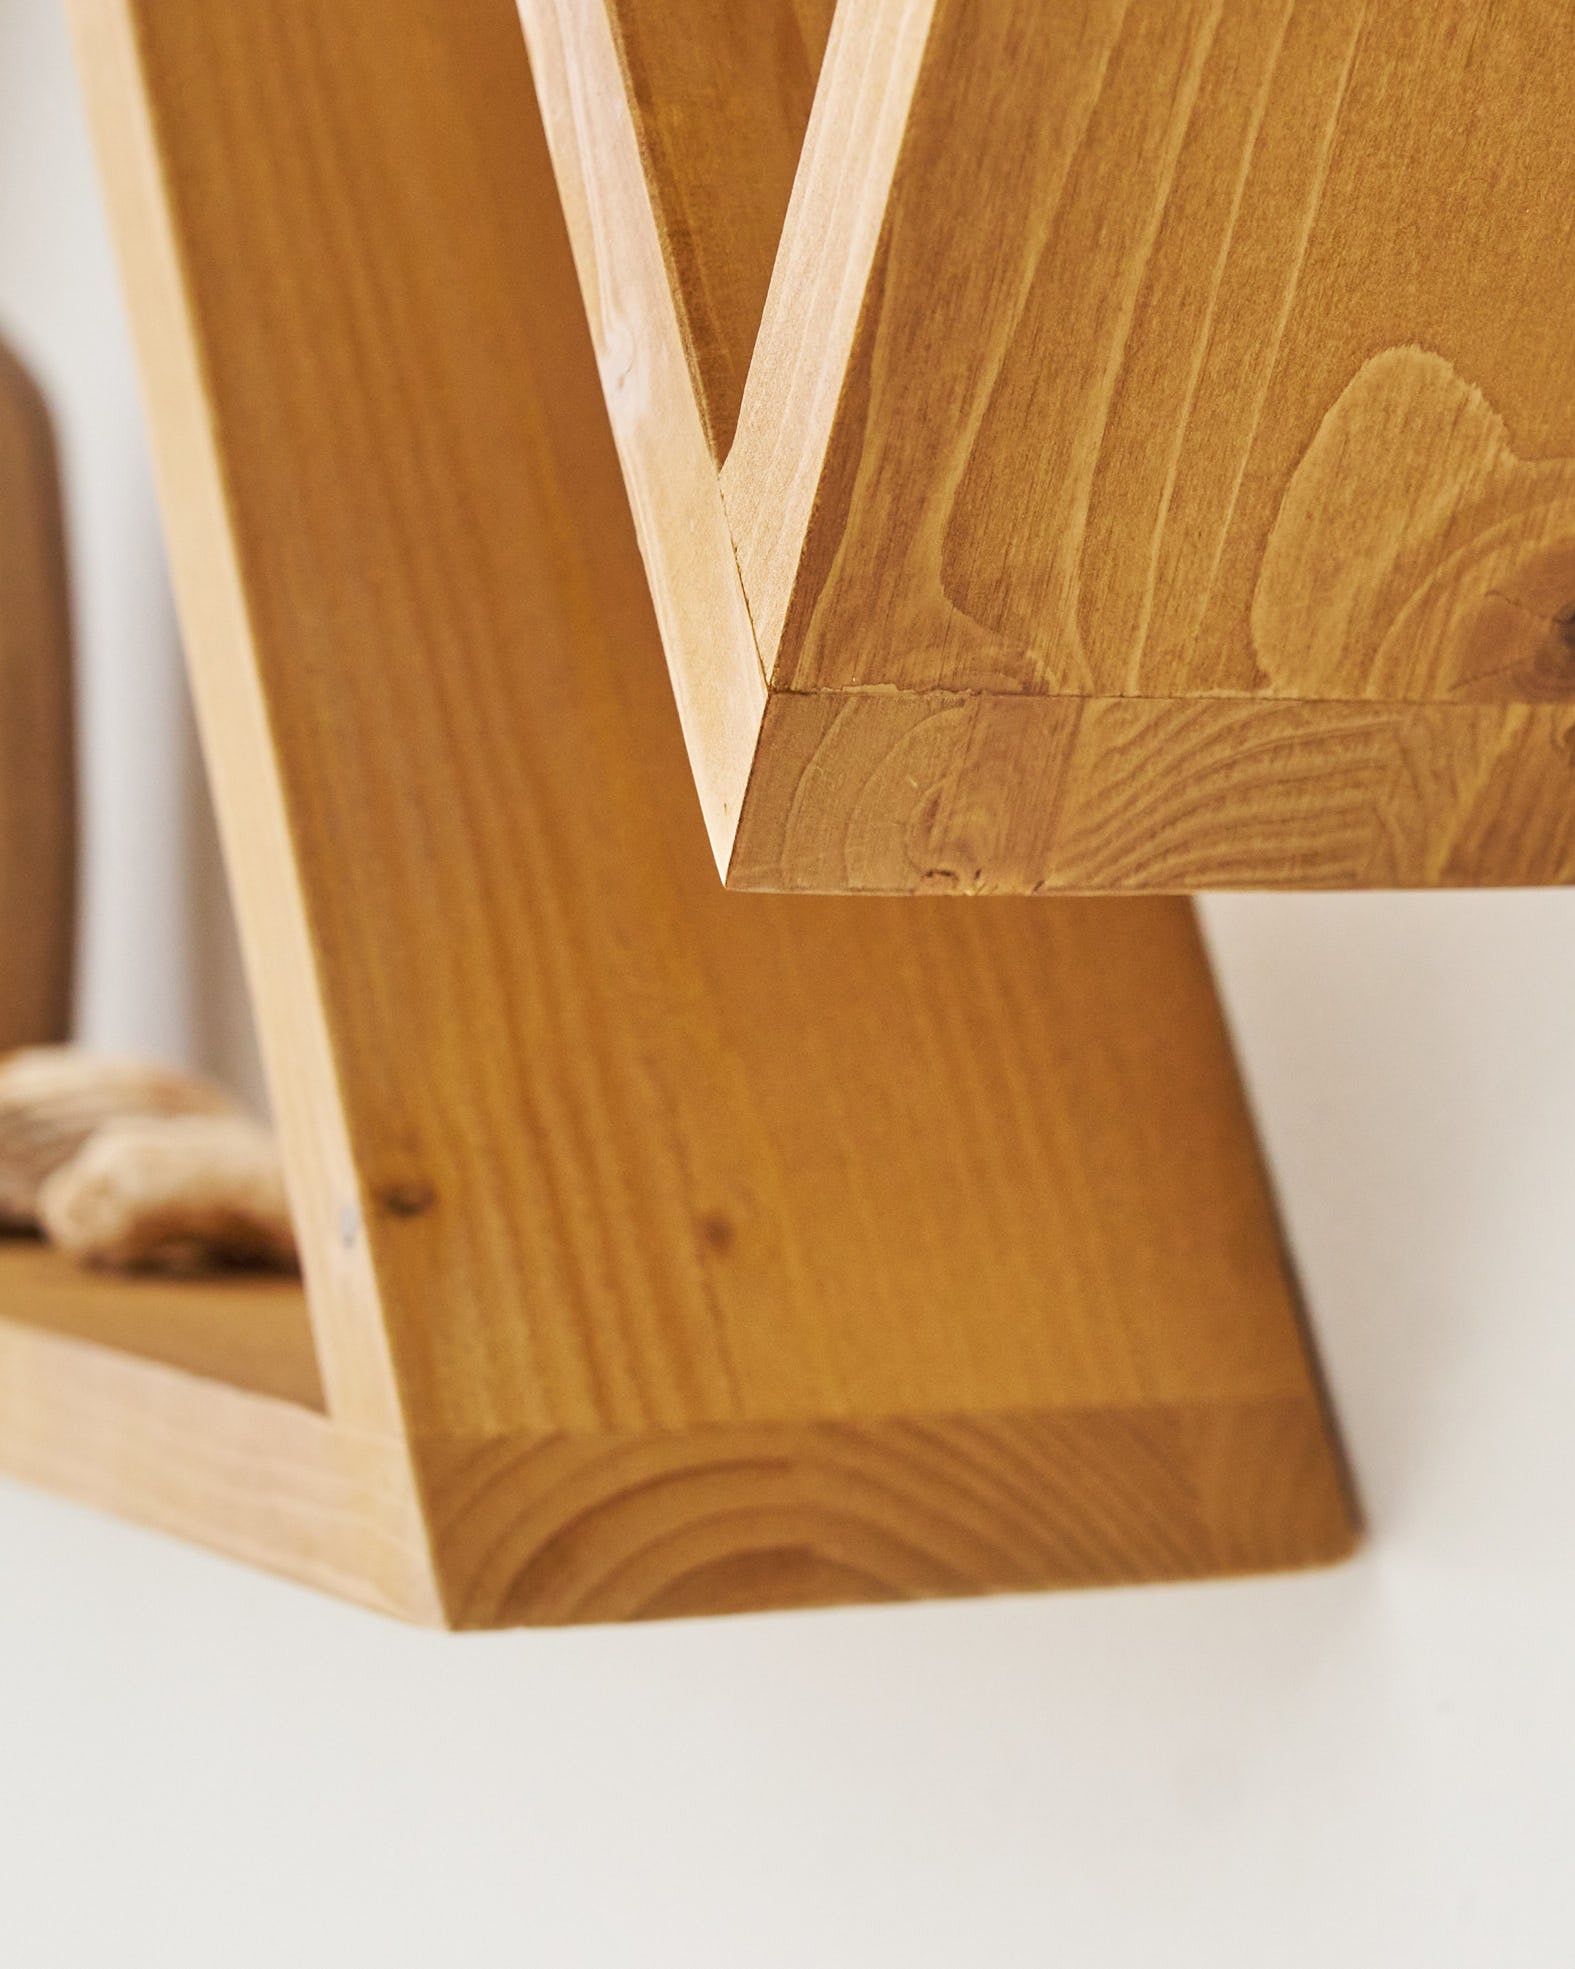 Estantería Librería de madera en tono natural NORDIC. Ofertas Online